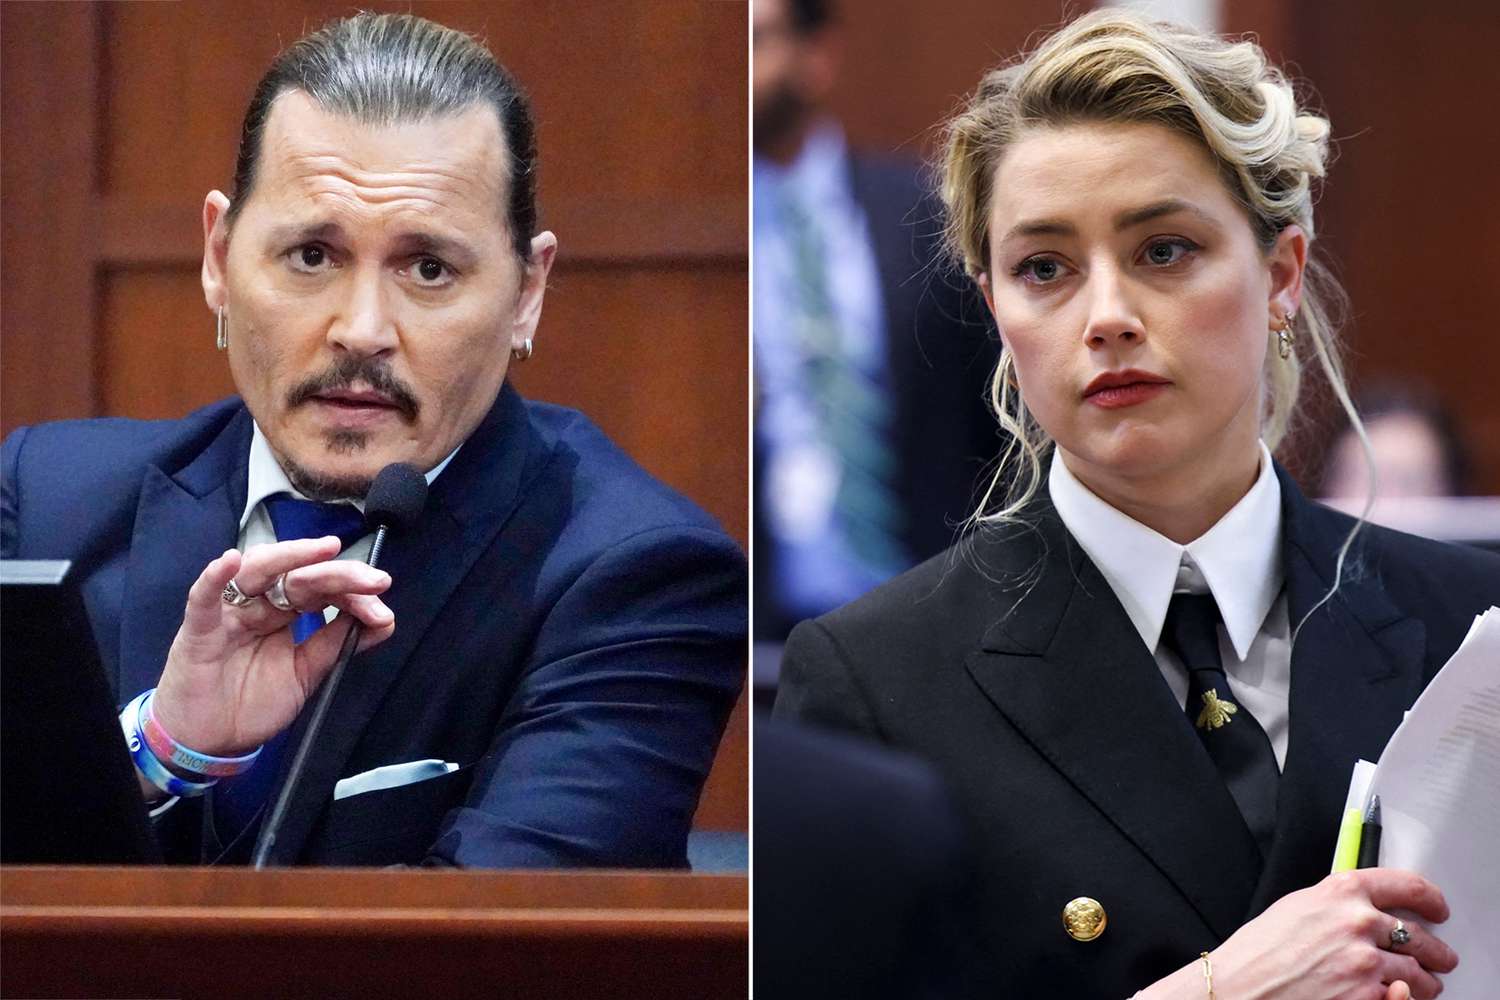 Amber Heard Said Poop in Bed with Johnny Depp Was 'Joke': Guard | PEOPLE.com